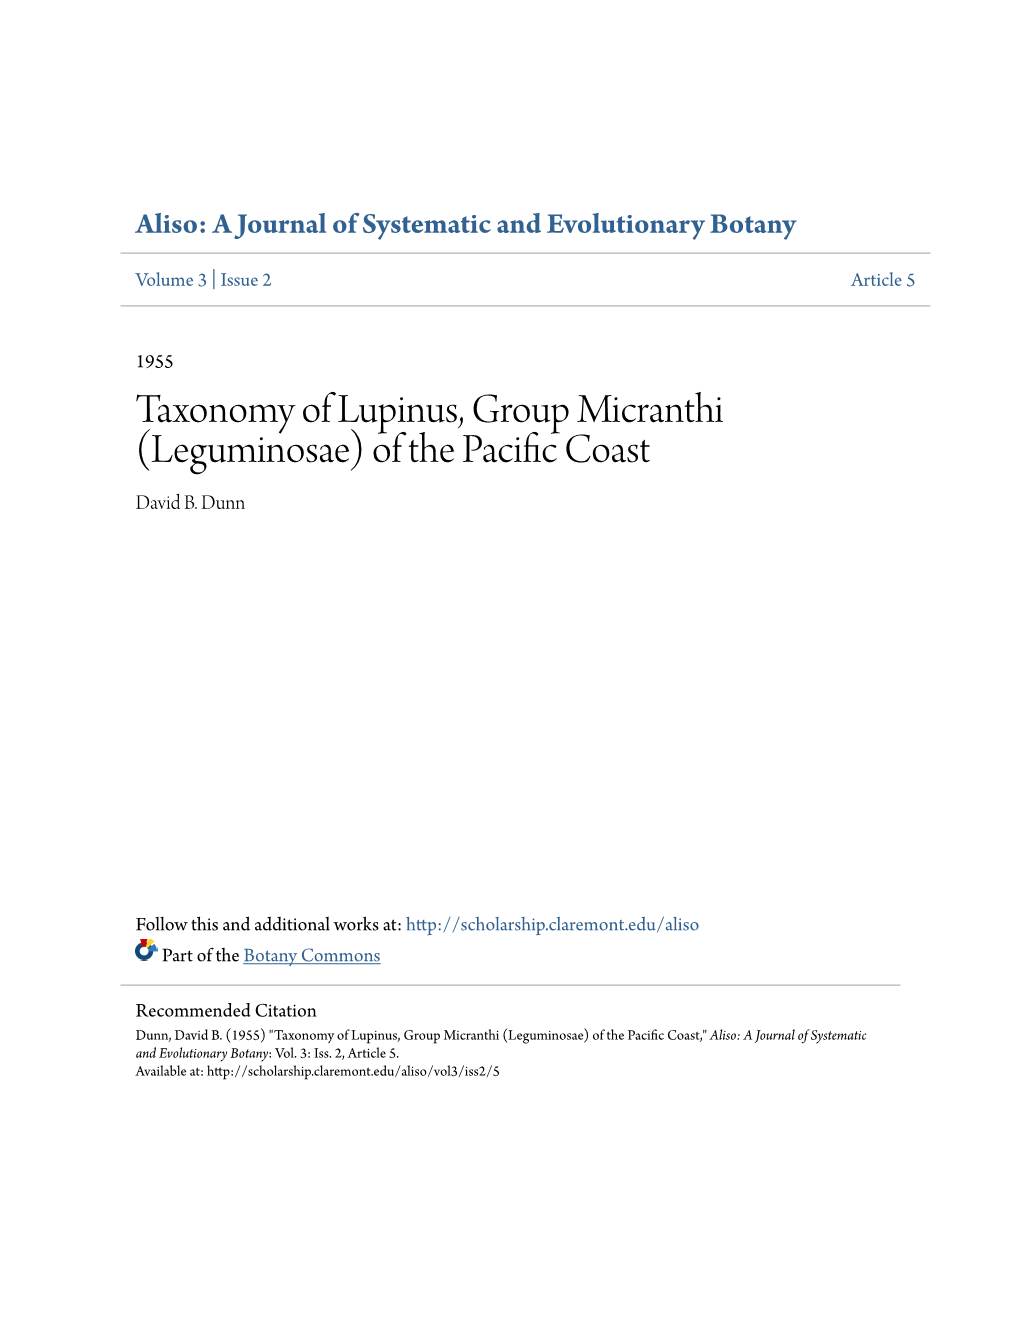 Taxonomy of Lupinus, Group Micranthi (Leguminosae) of the Pacific Oc Ast David B